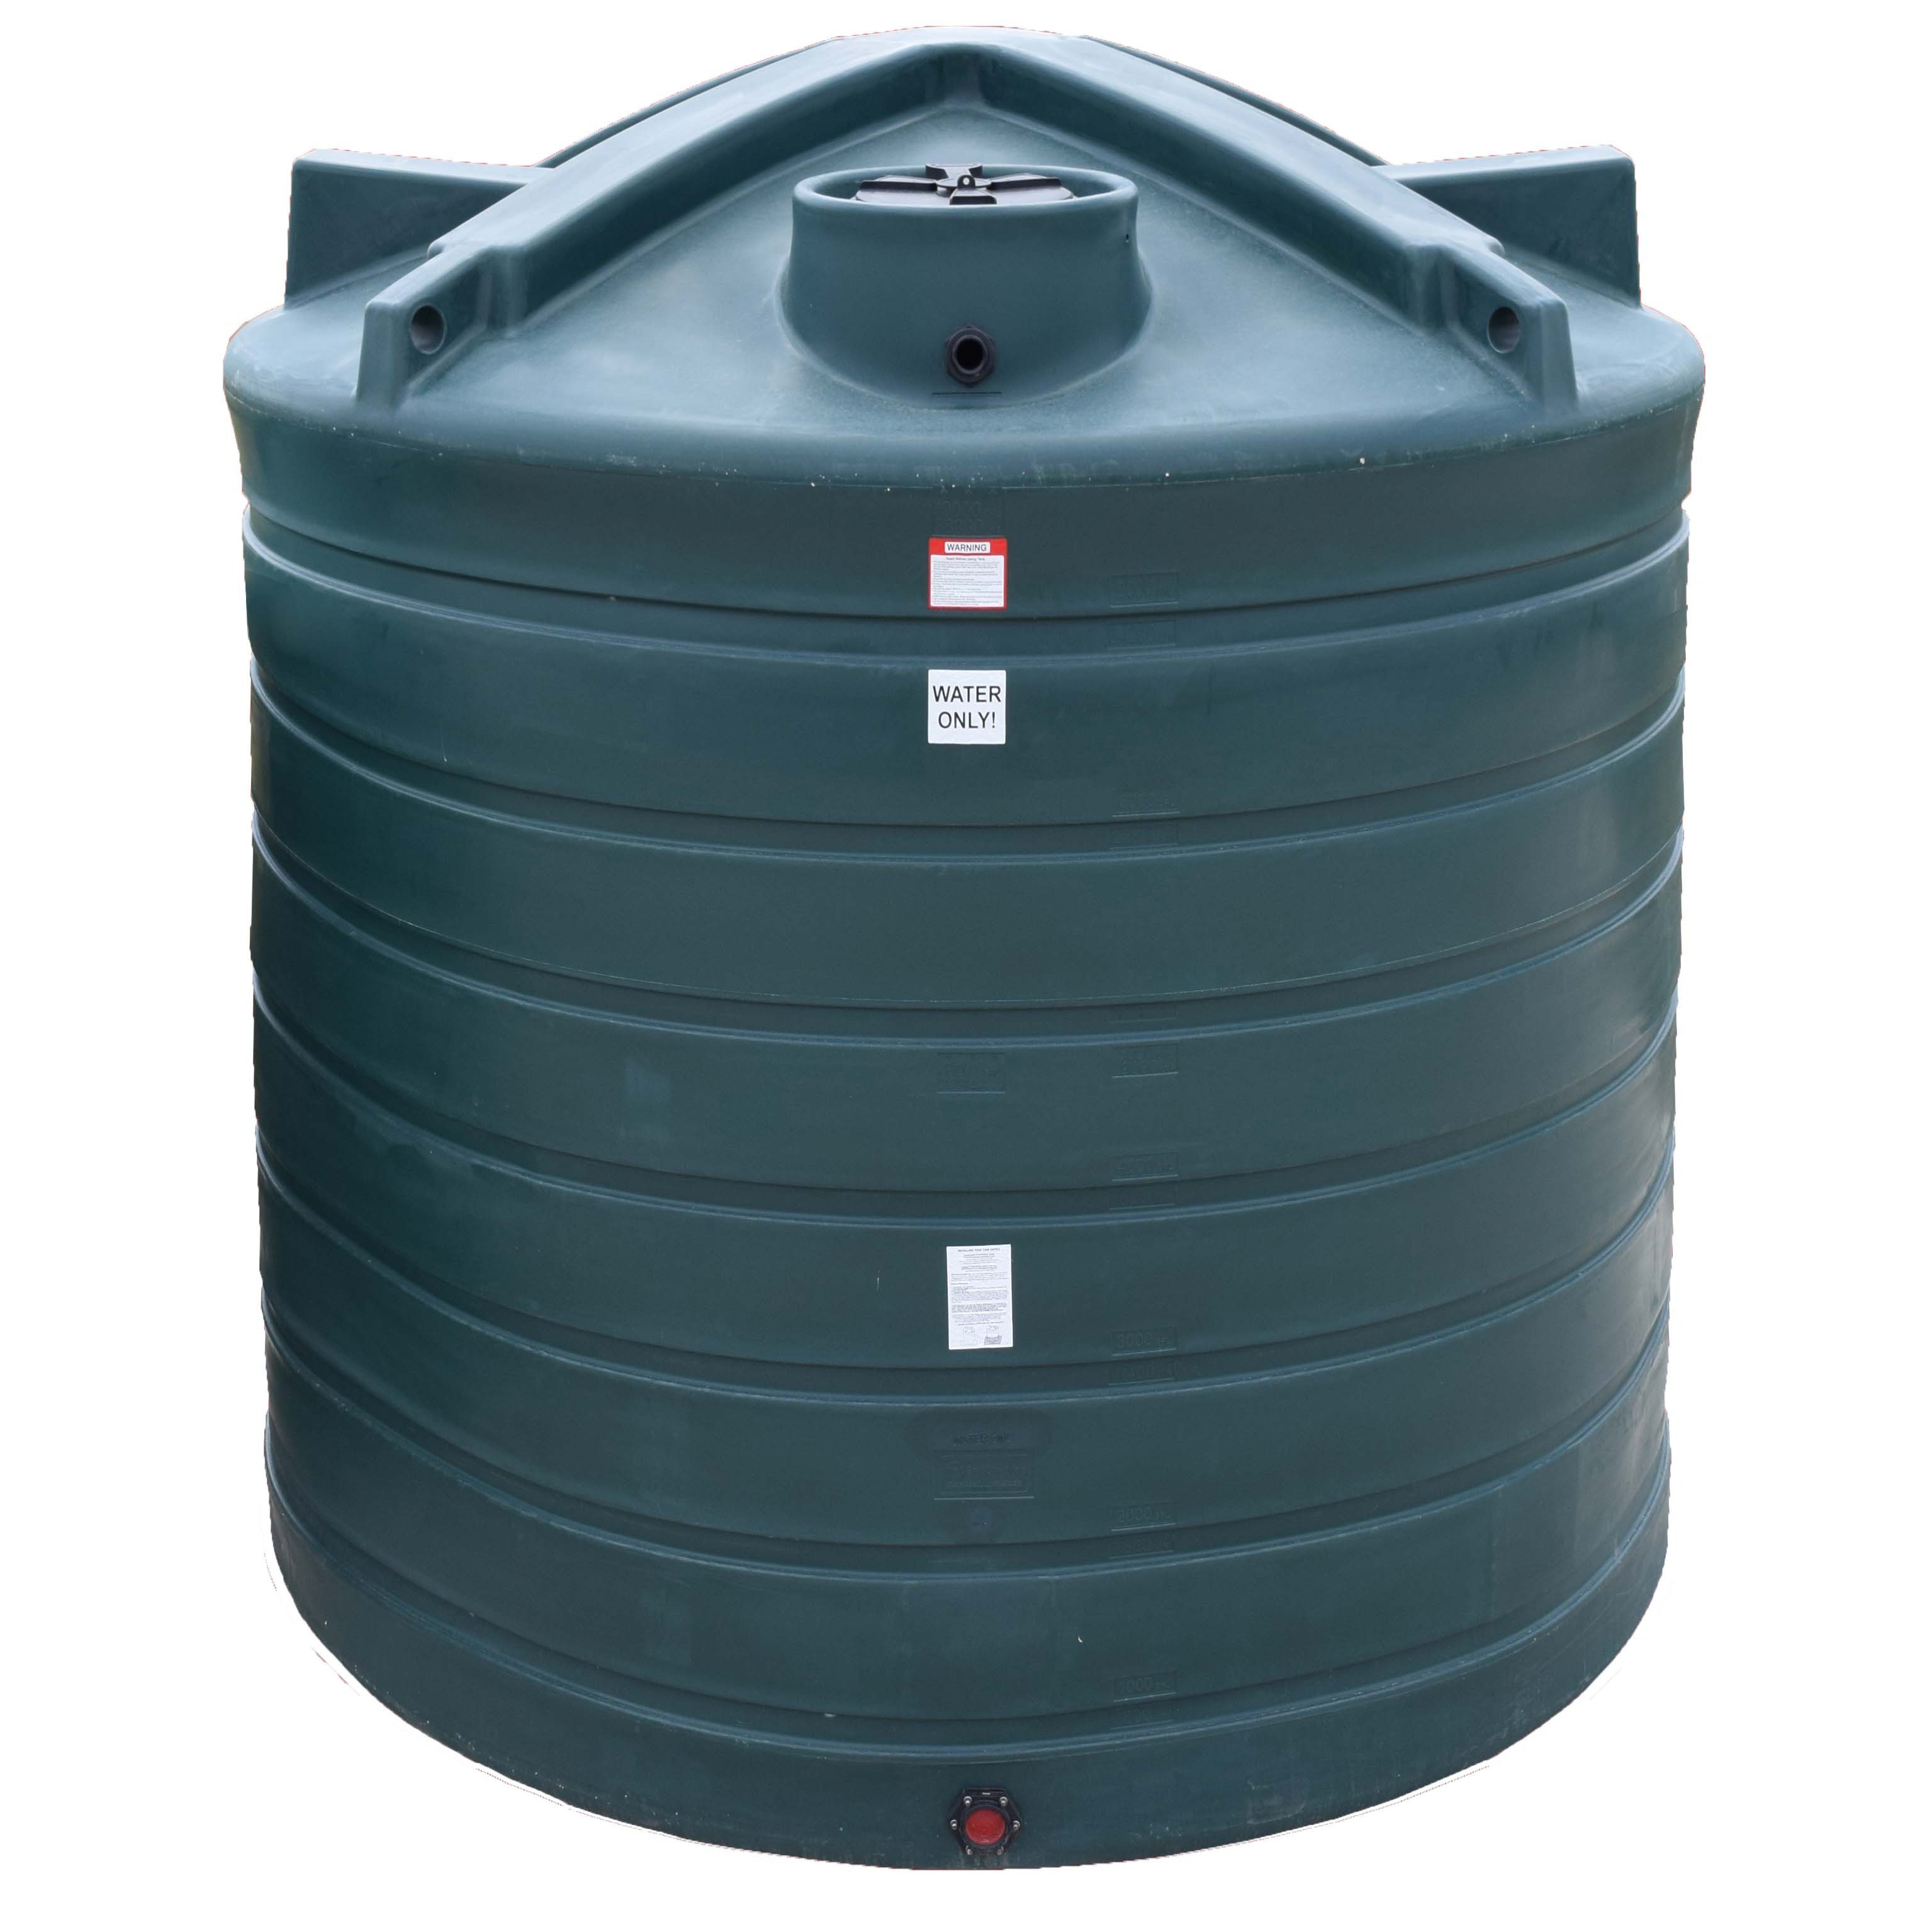 Best ideas about Vertical Water Storage Tank
. Save or Pin Water Storage Tank Vertical Water Storage Tank Now.